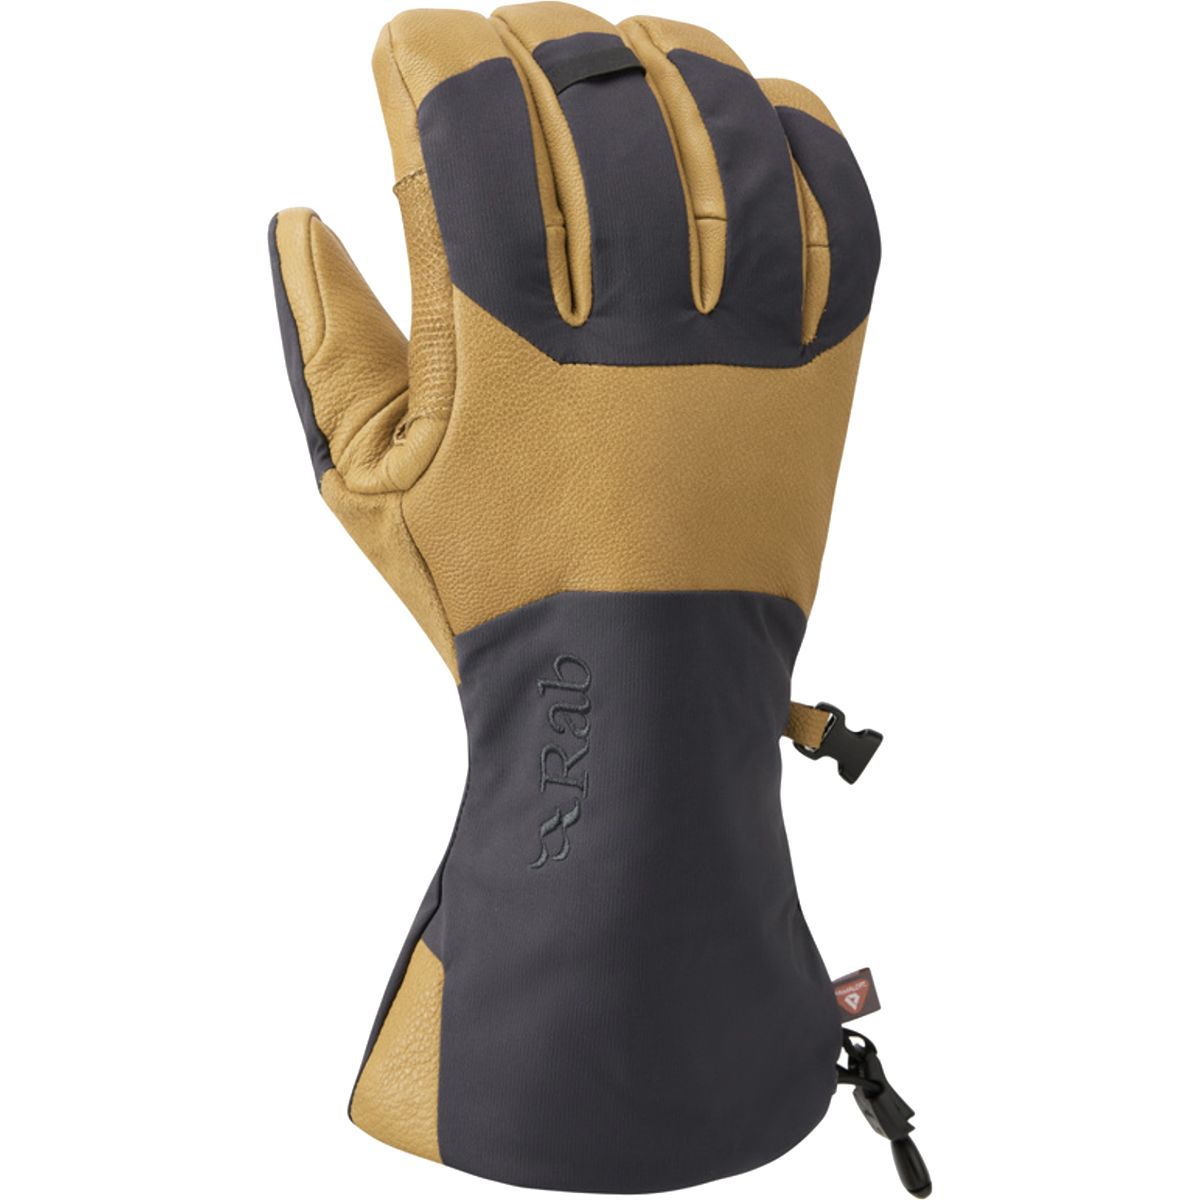 Rab Guide 2 GTX Glove - Men's Steel